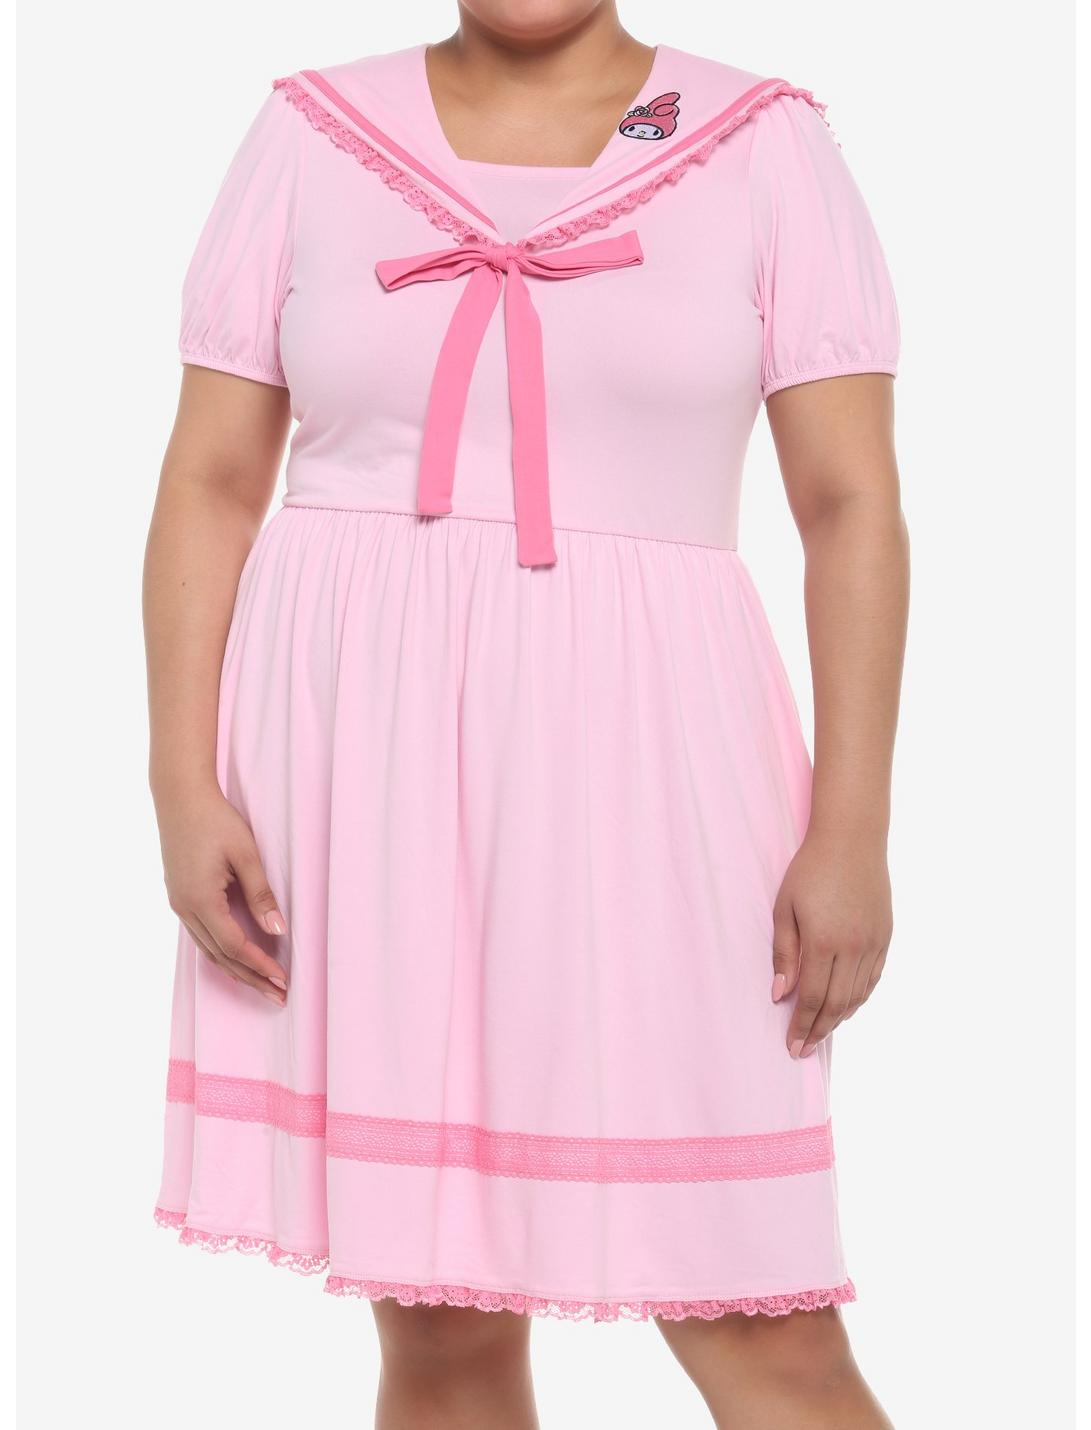 My Melody Sailor Dress Plus Size, MULTI, hi-res